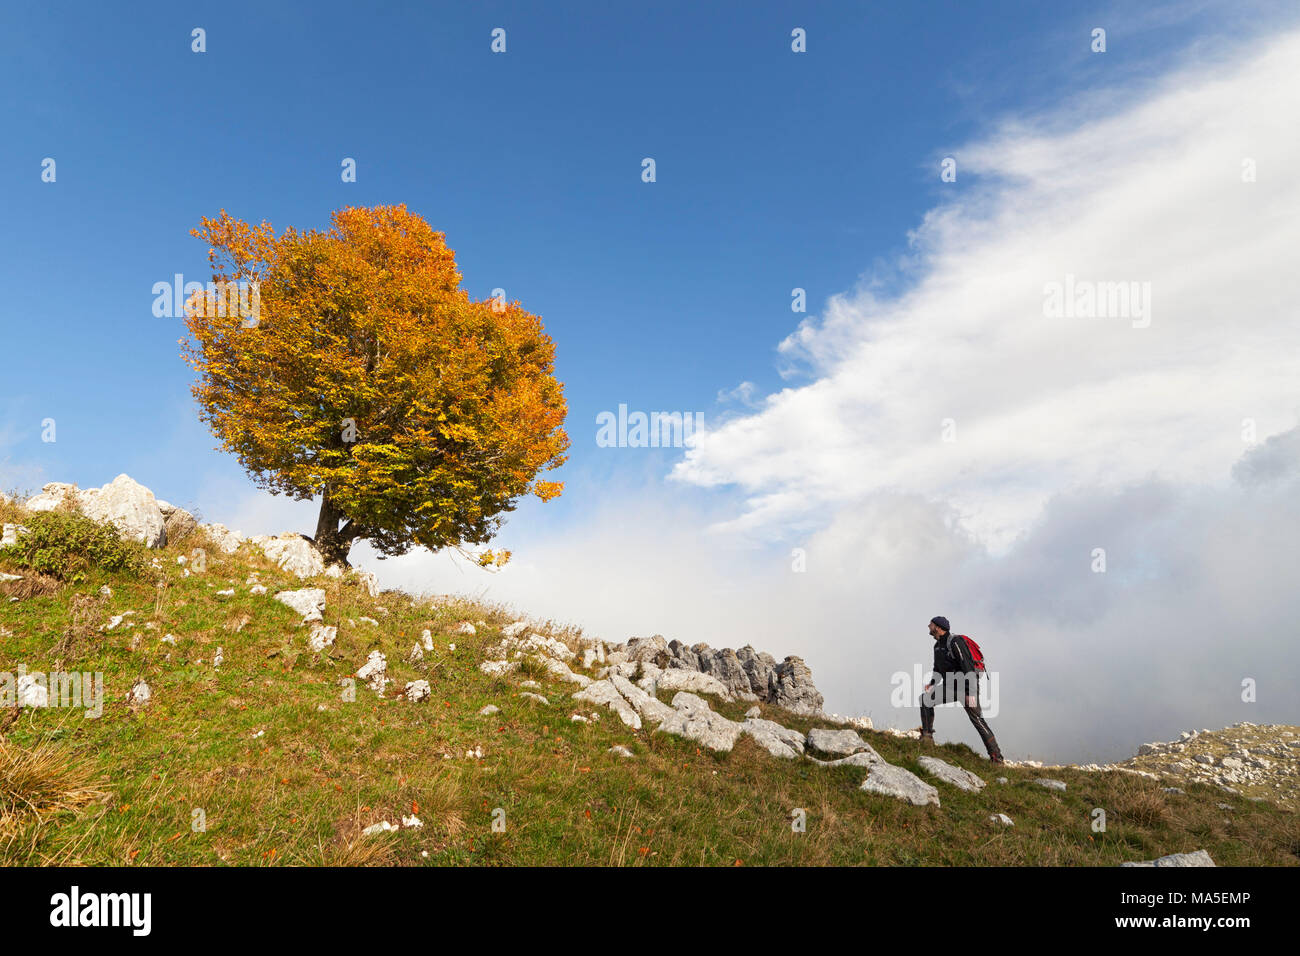 A lonely beech at Pizzoc Mount, Venetian Prealps, Fregona, Treviso, Italy Stock Photo